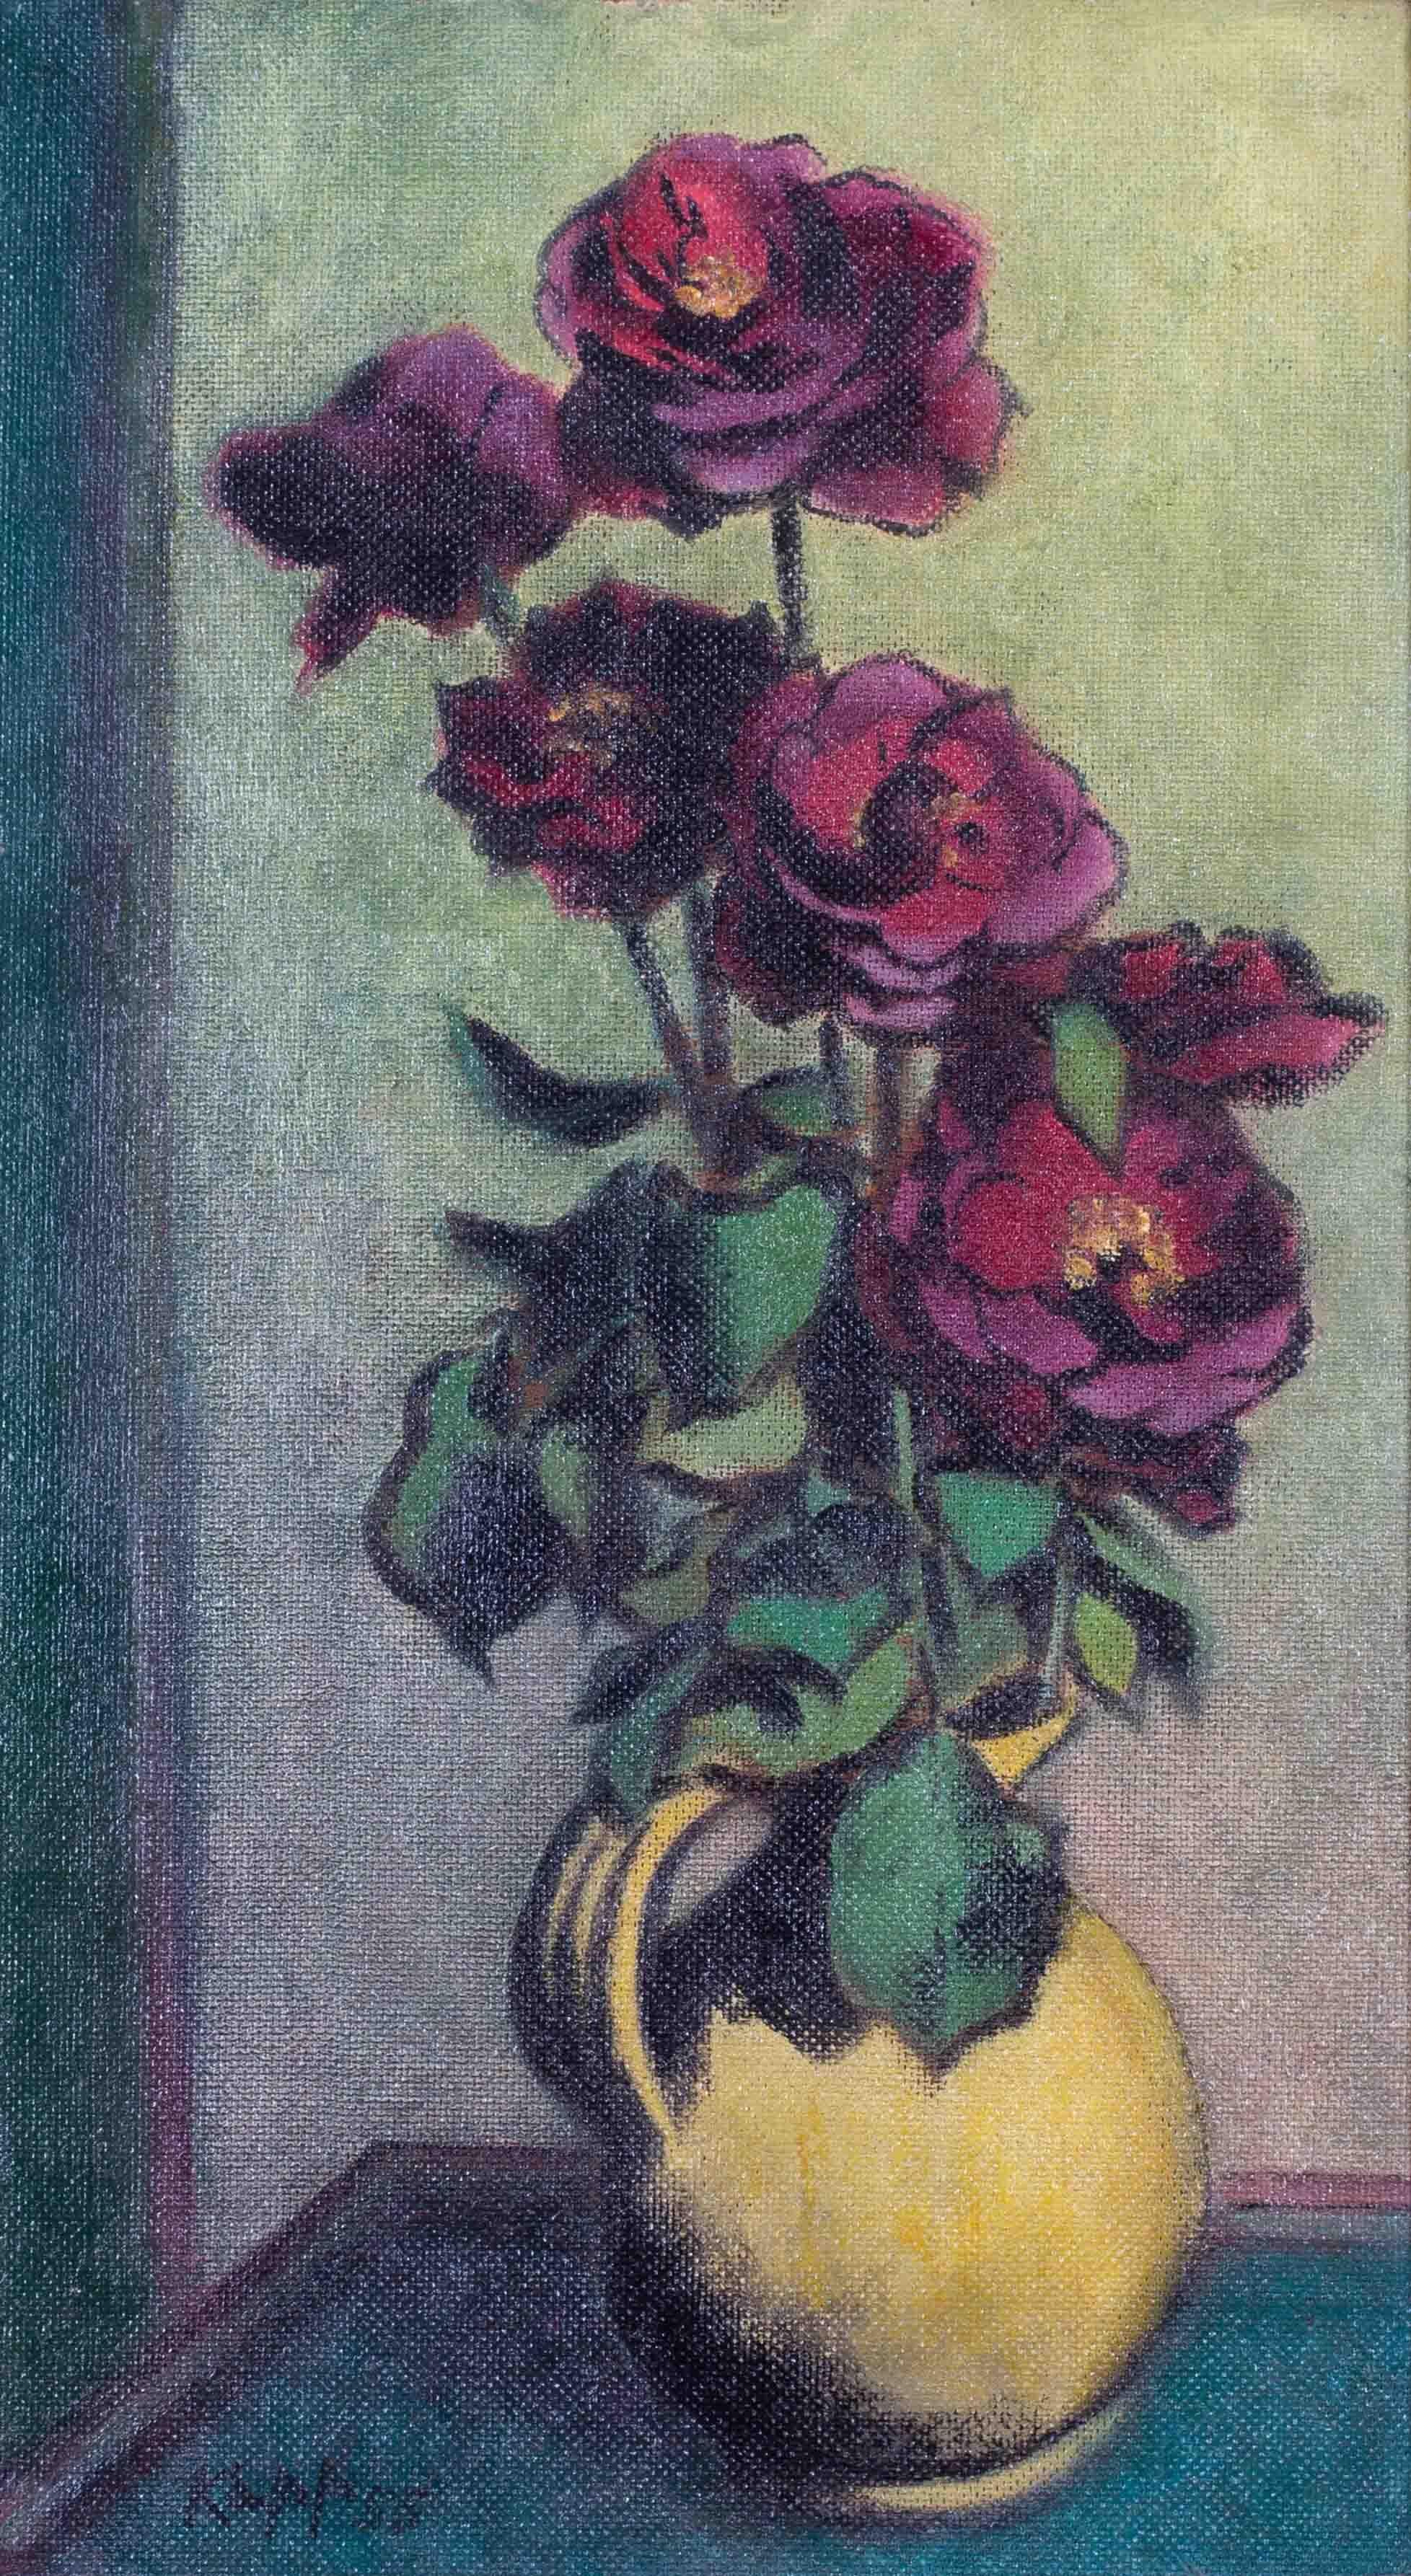 Mid Century Modern British 'roses in a jug' by British German artist Kapp, 1955 - Painting by Edmond Xavier Kapp